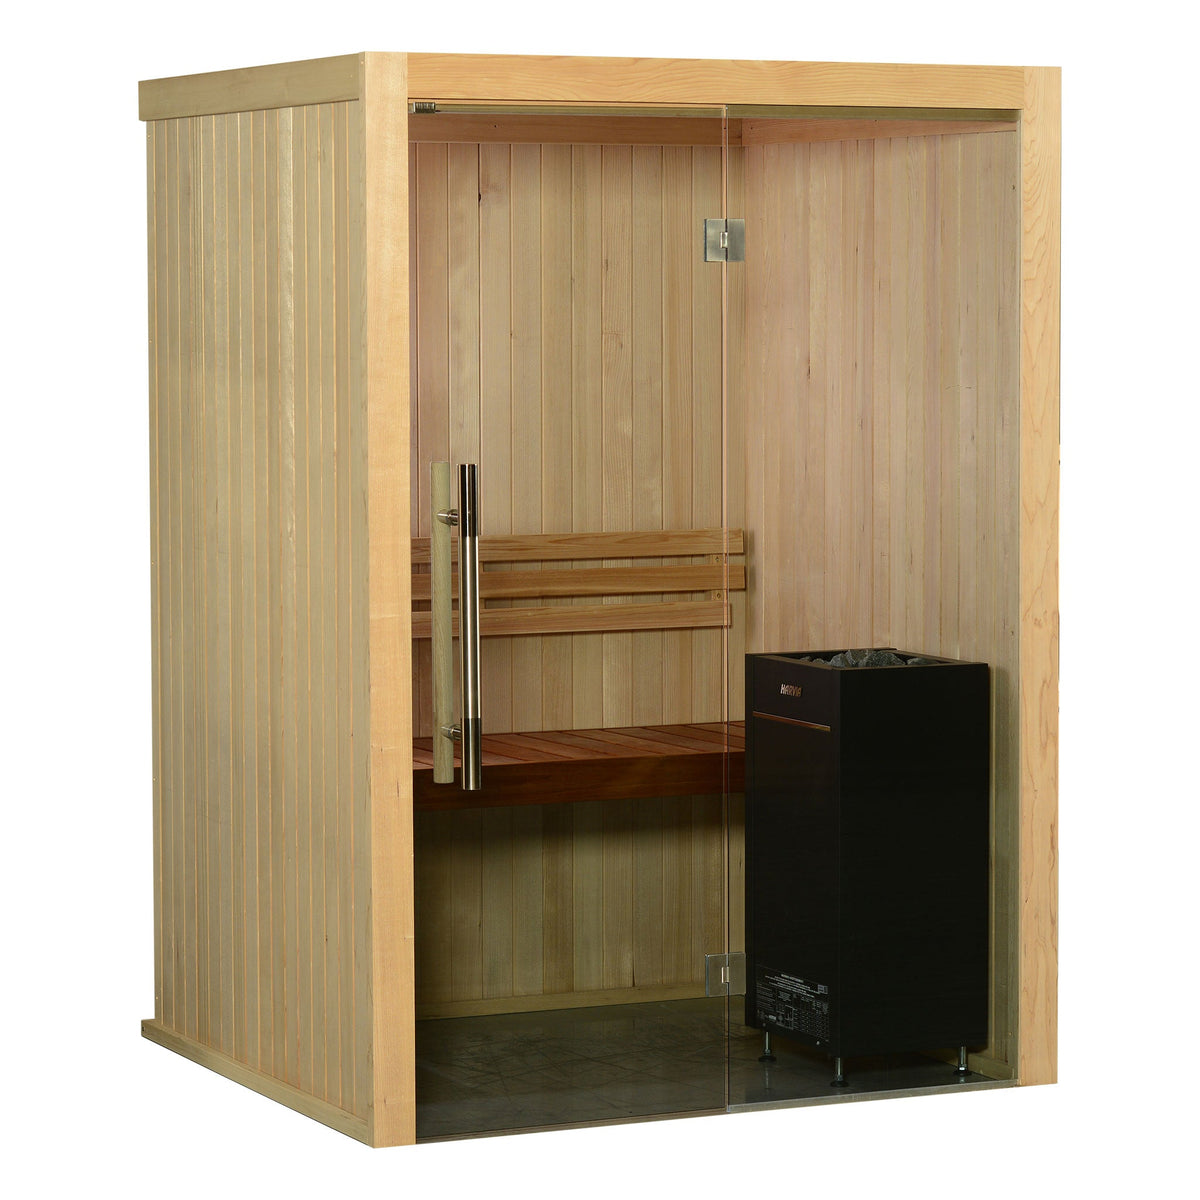 Almost Heaven Spectacle 2-Person Indoor Sauna-Traditional Saunas-Nordica Sauna